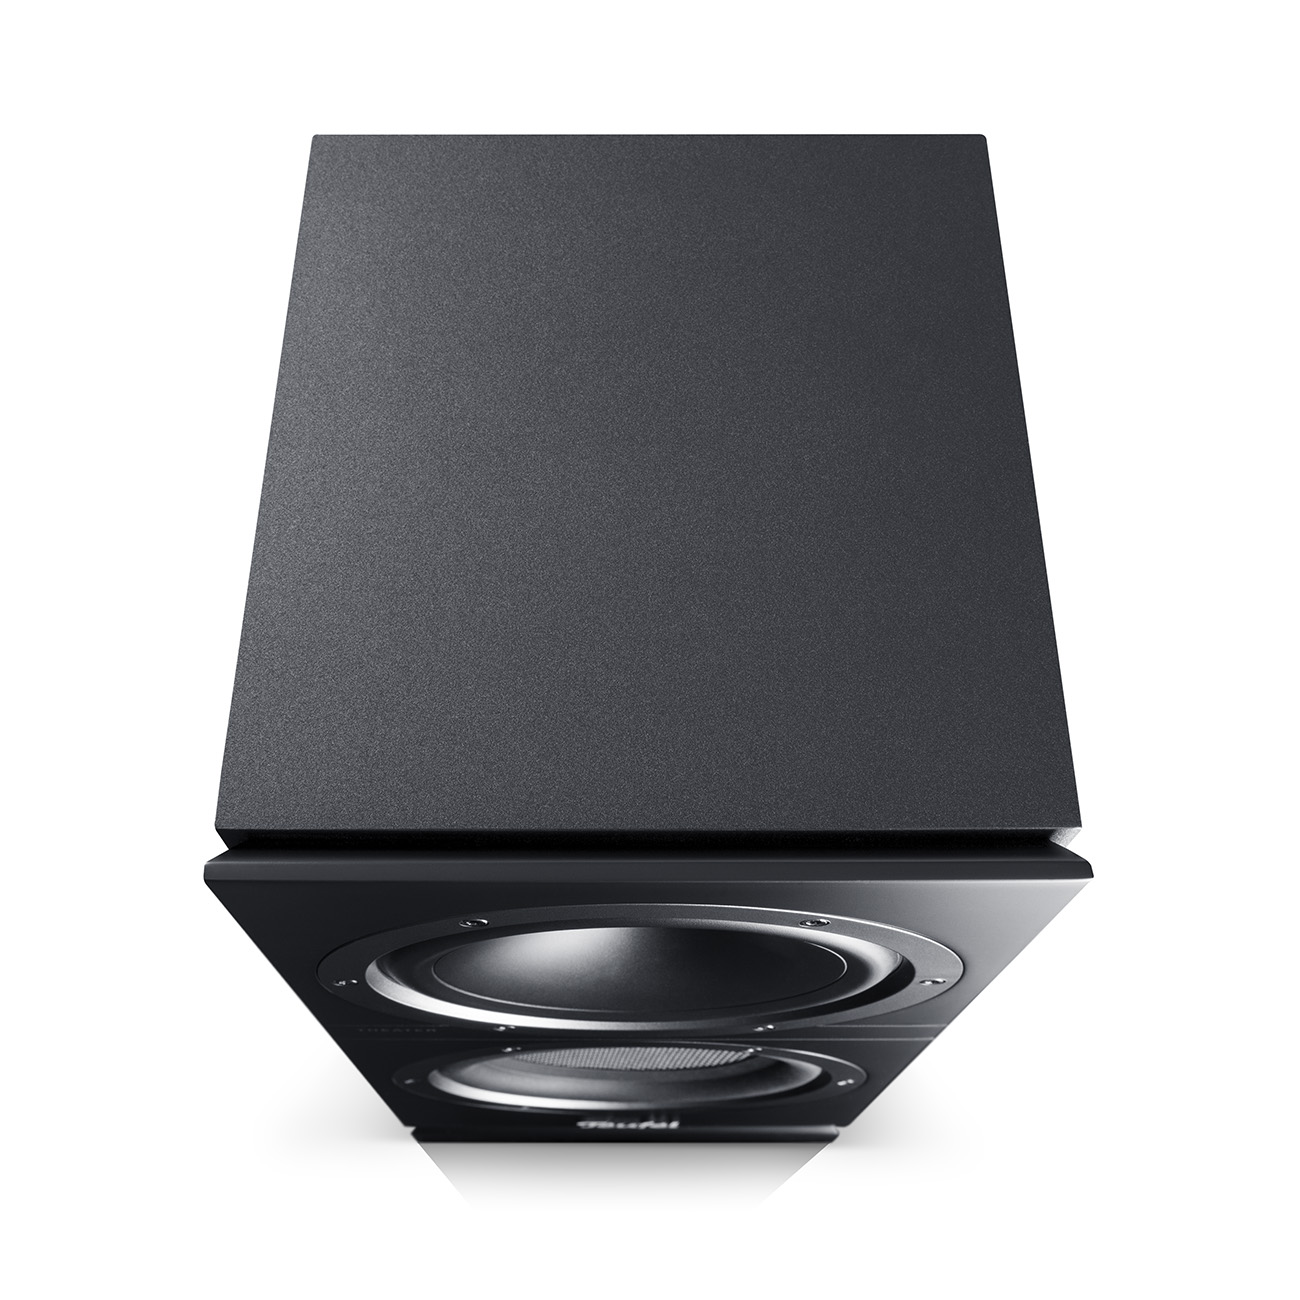 TEUFEL Stereo-Regallautsprecher THEATER Schwarz 500S Passiv-Lautsprecher,